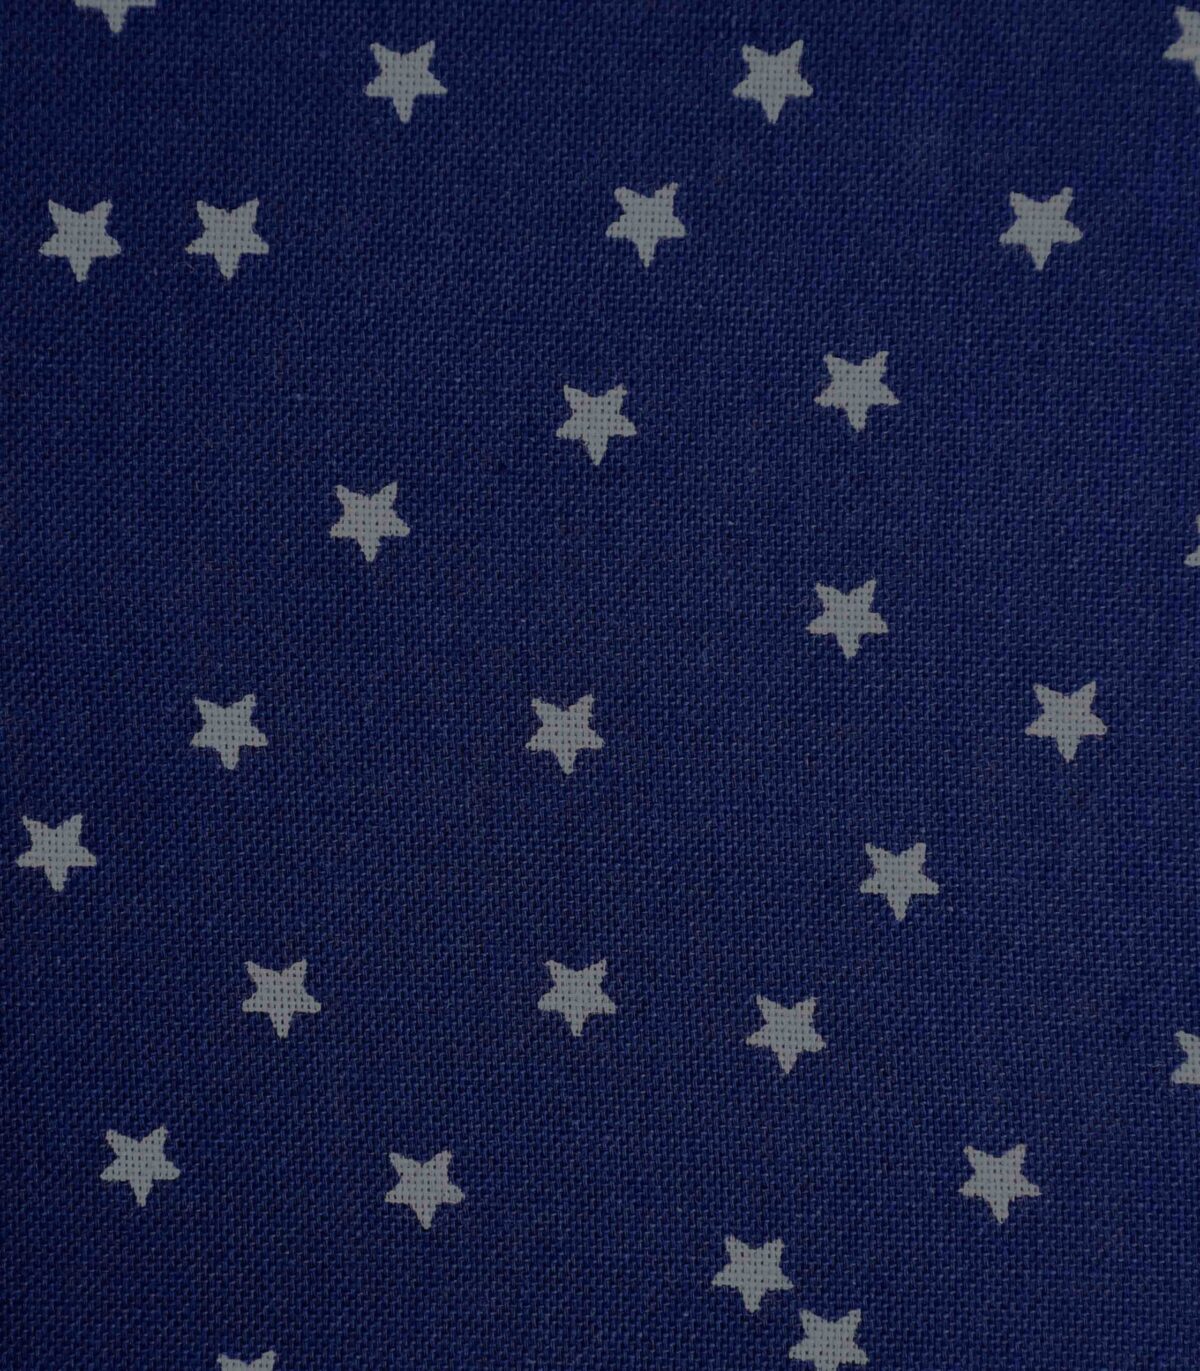 Cotton Navy Base Star Print Fabric